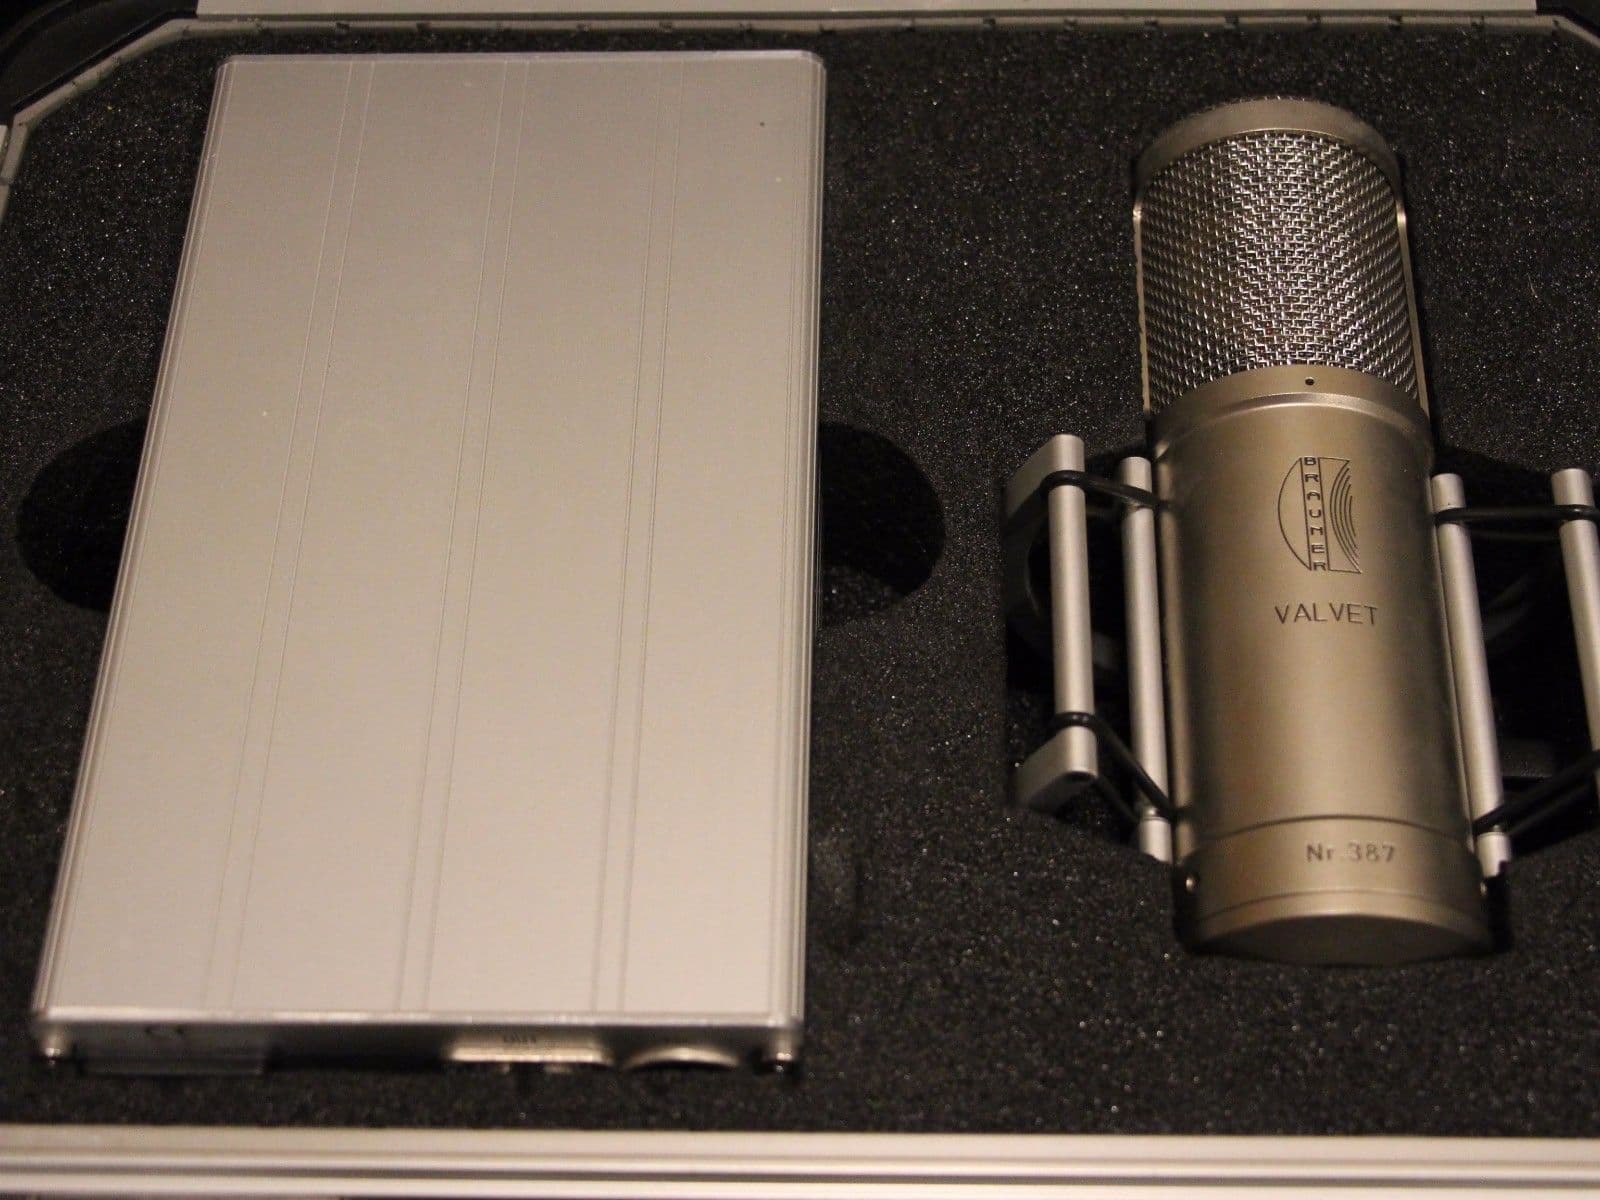 Brauner Valvet Tube Condenser Microphone______1500Euro